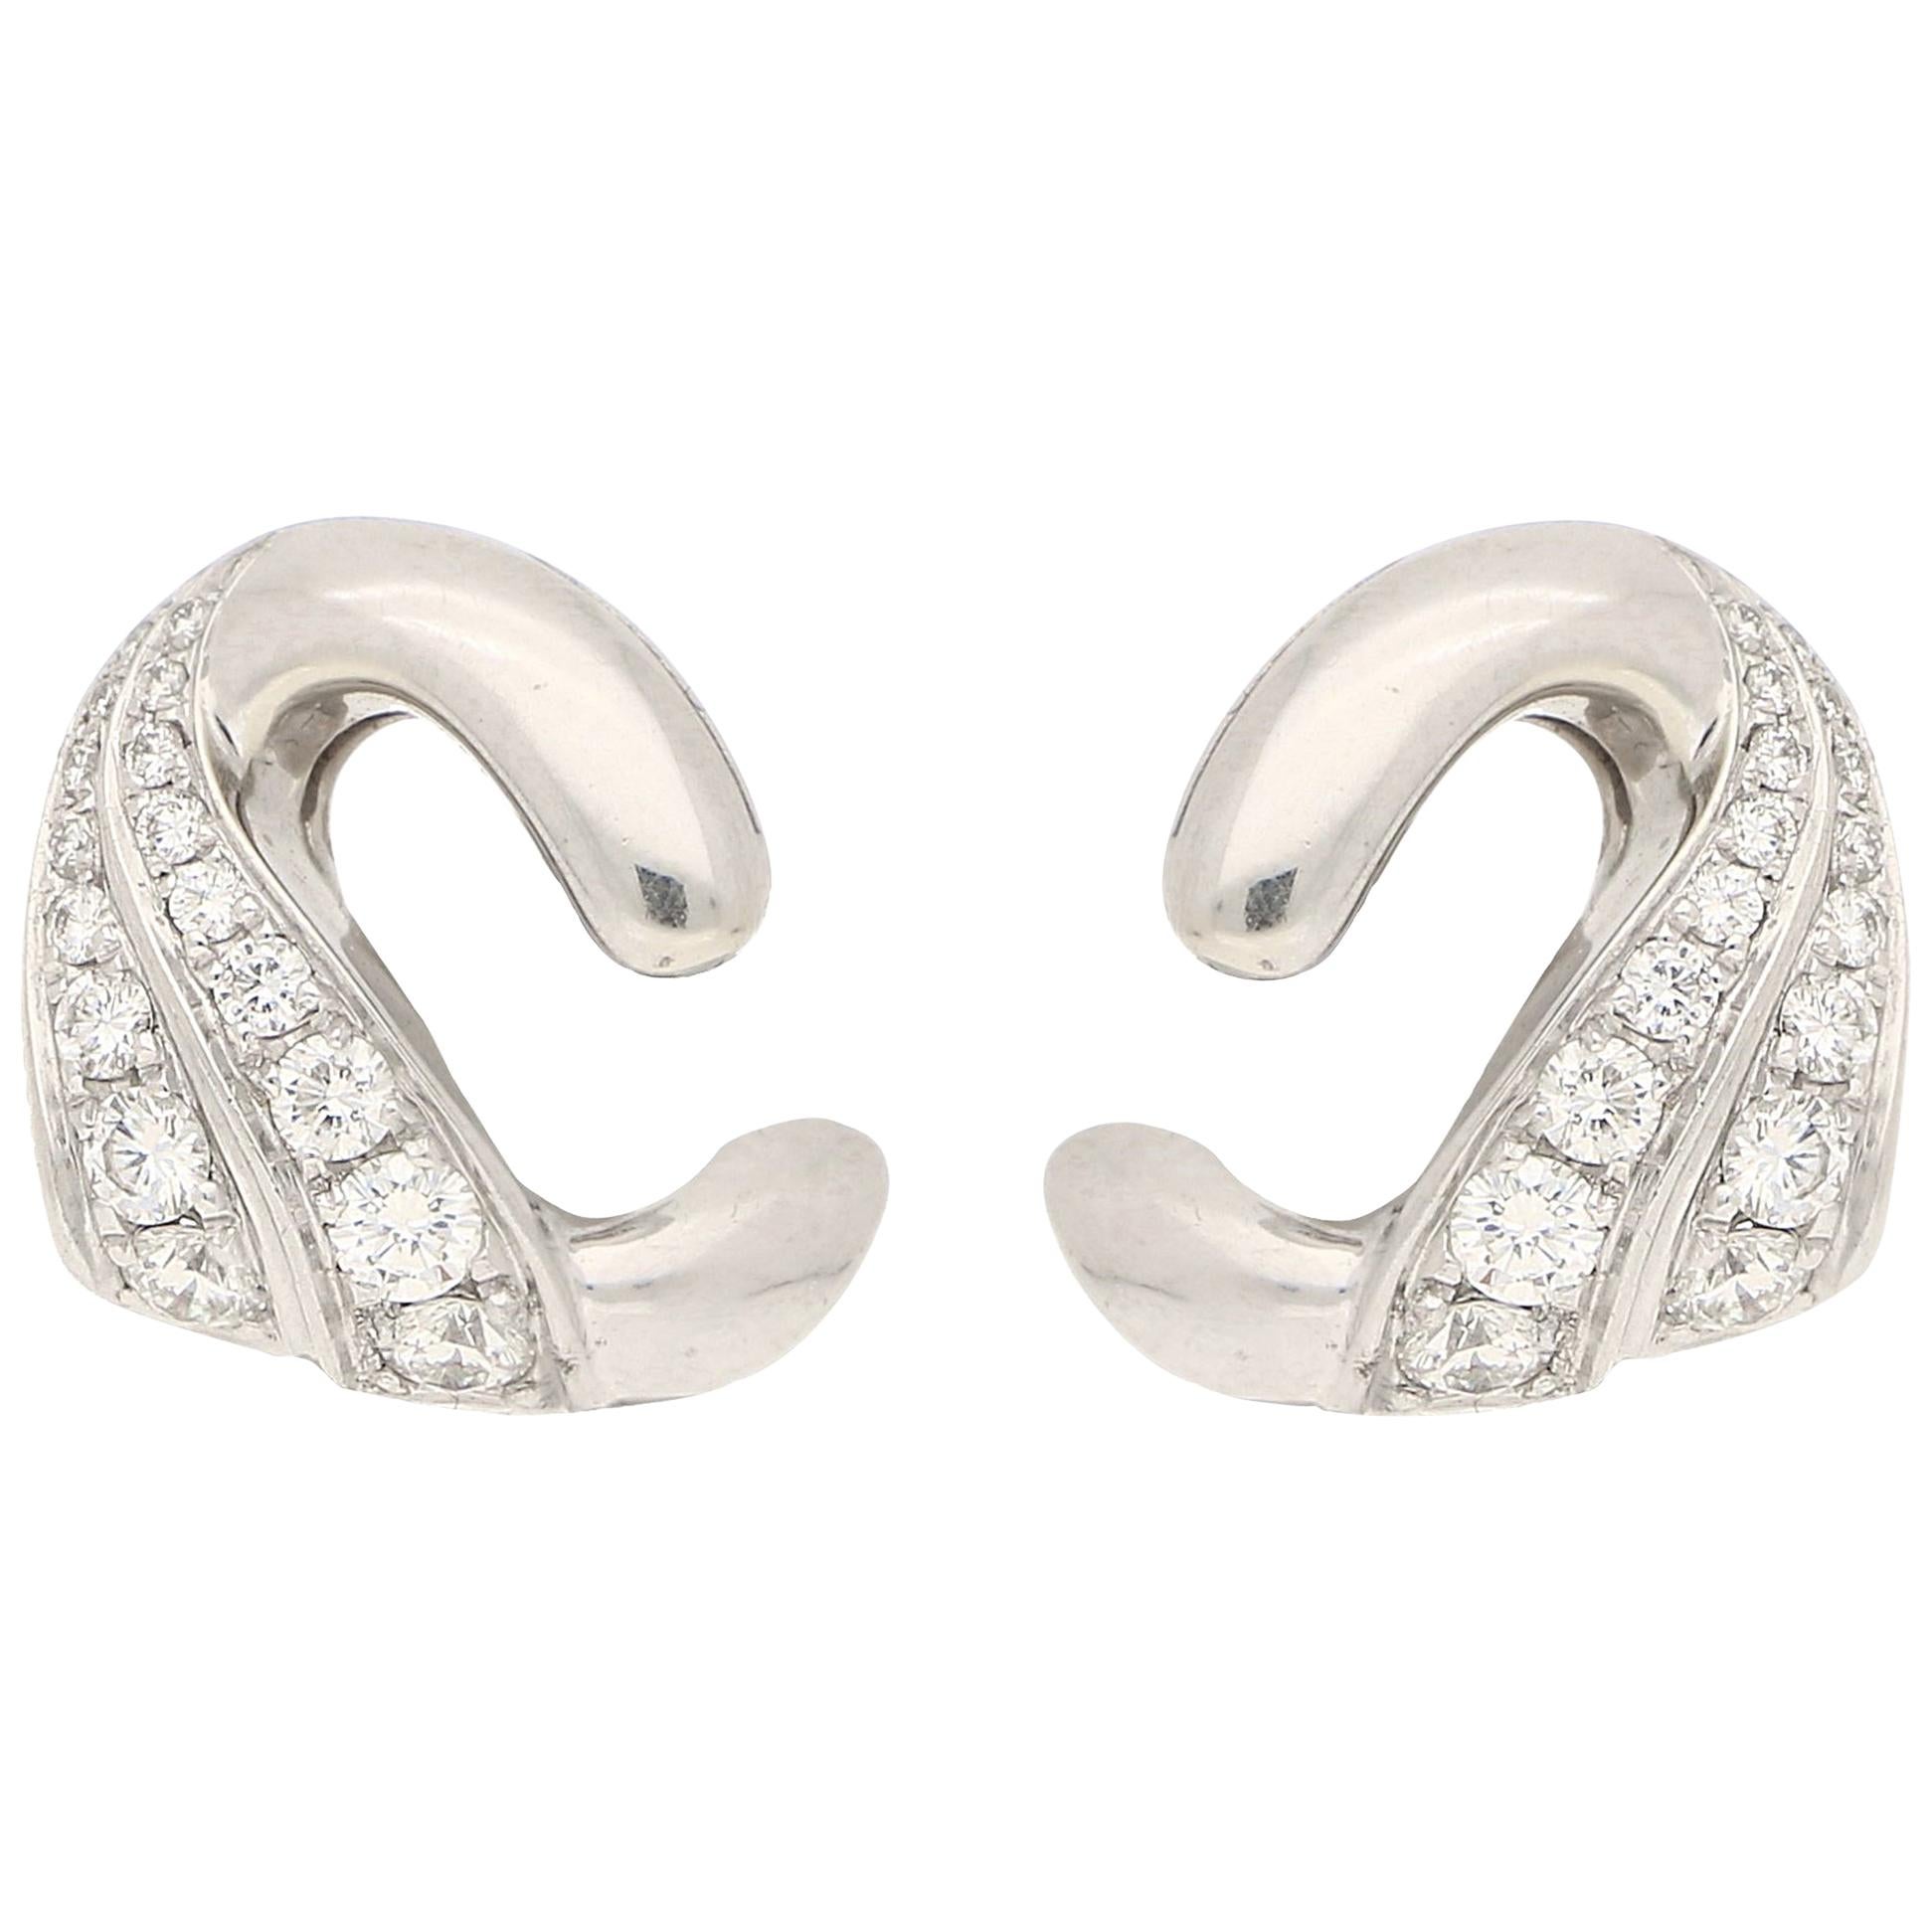 Vintage Bvlgari Diamond Clip-On Earrings in White Gold